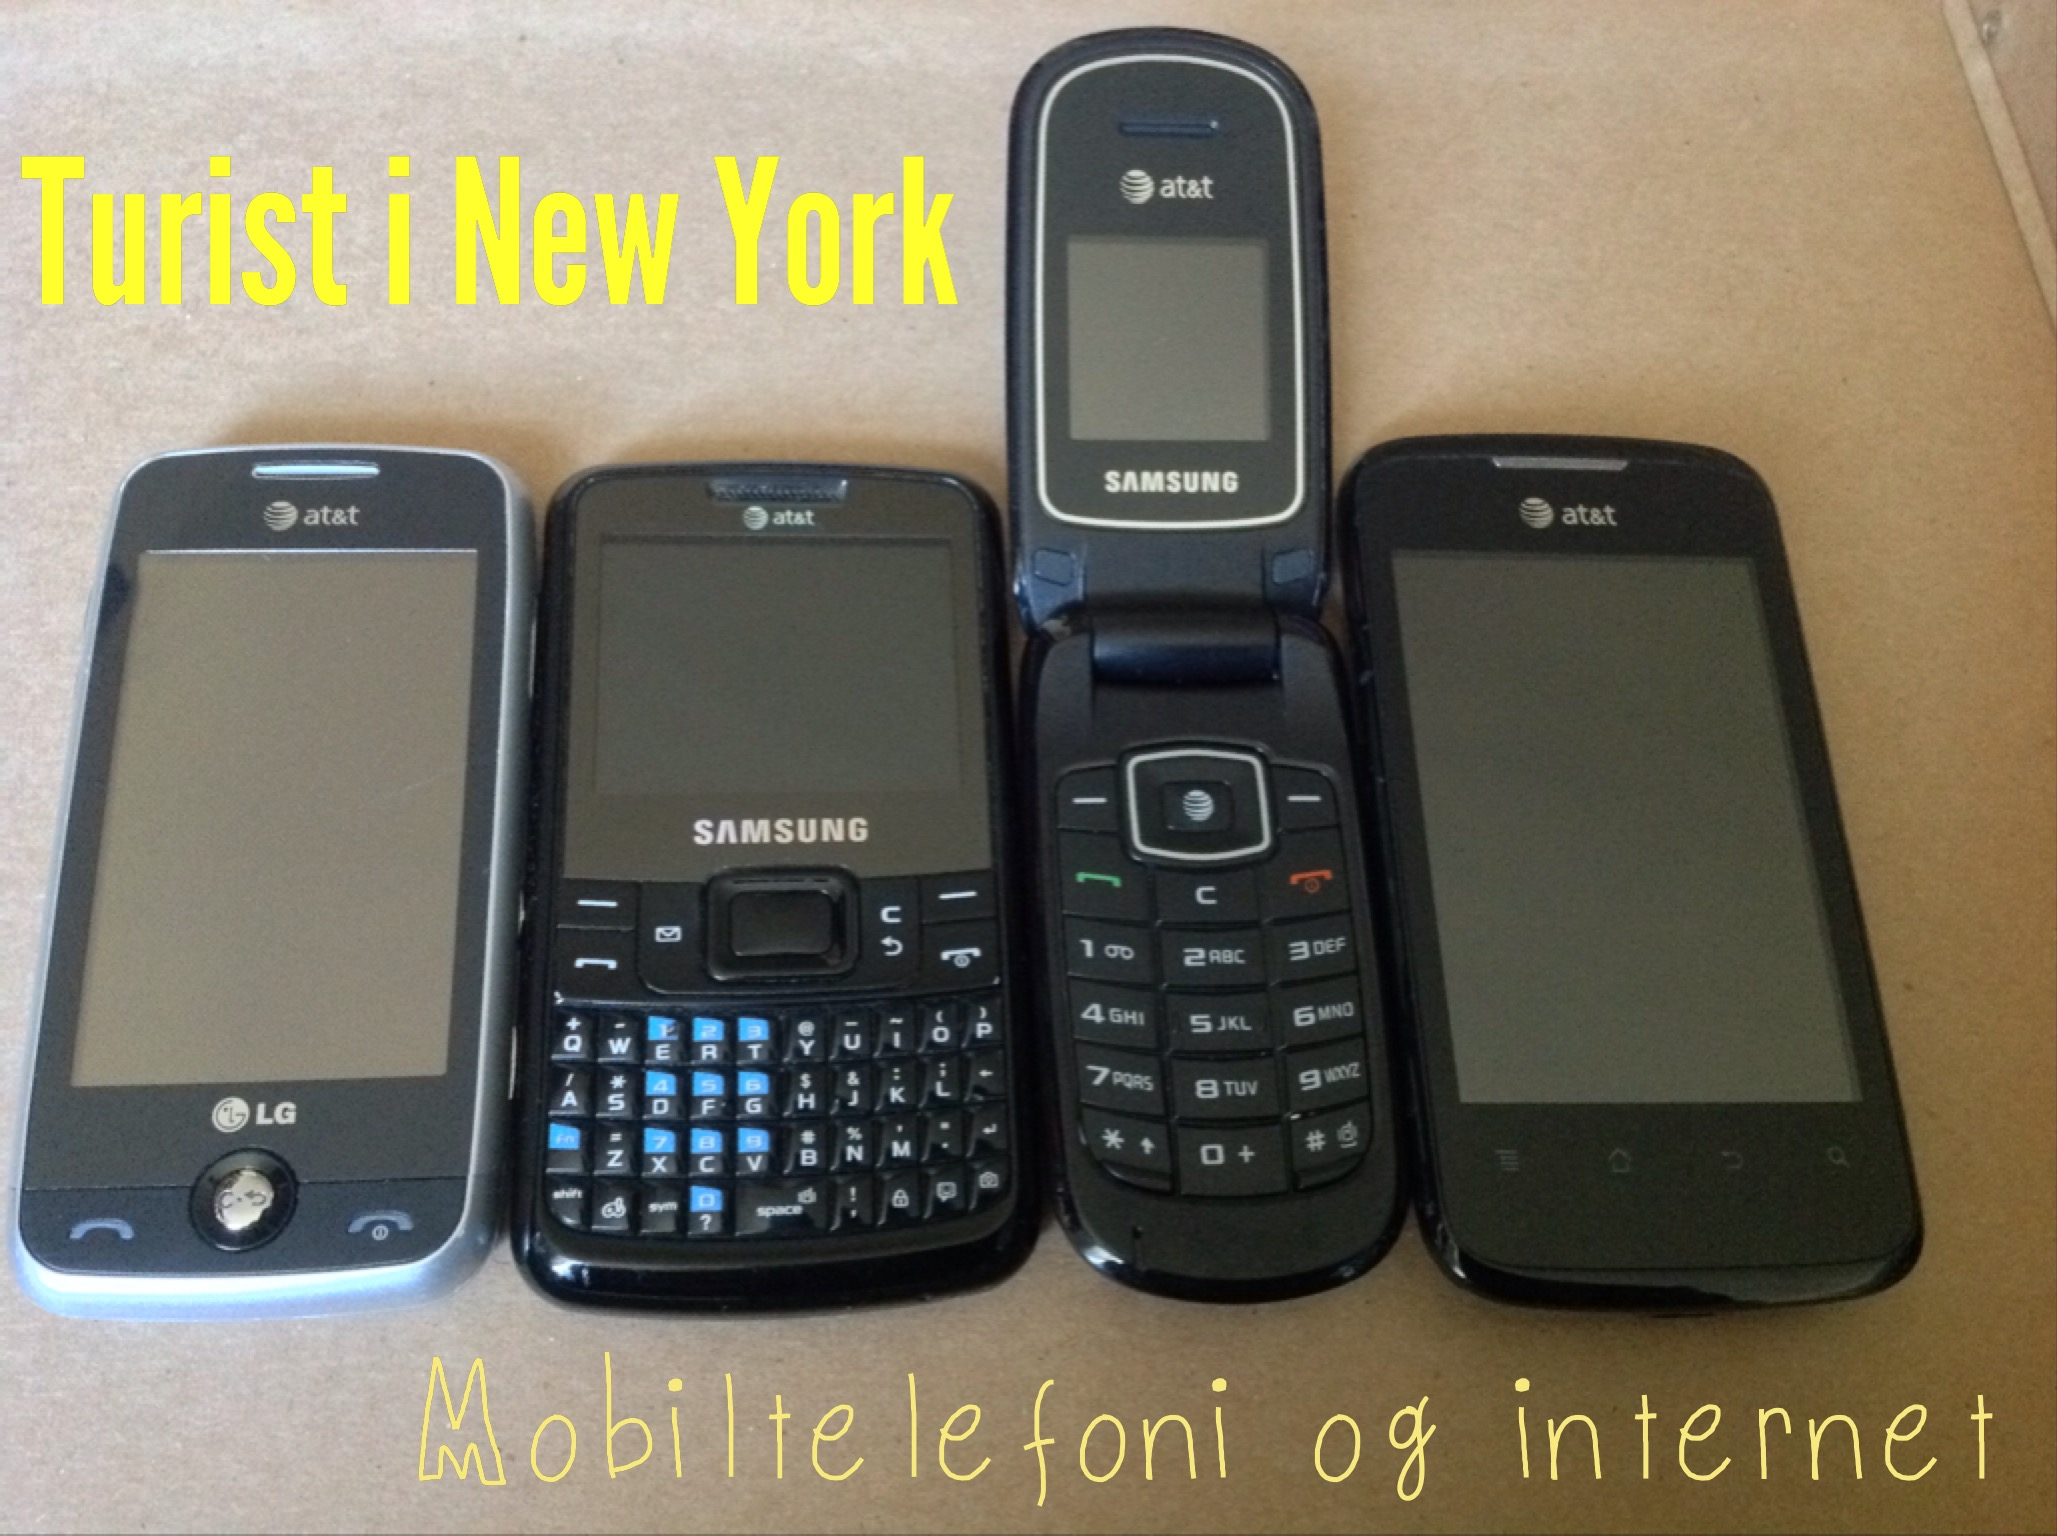 Mobiltelefoni & Internet i USA